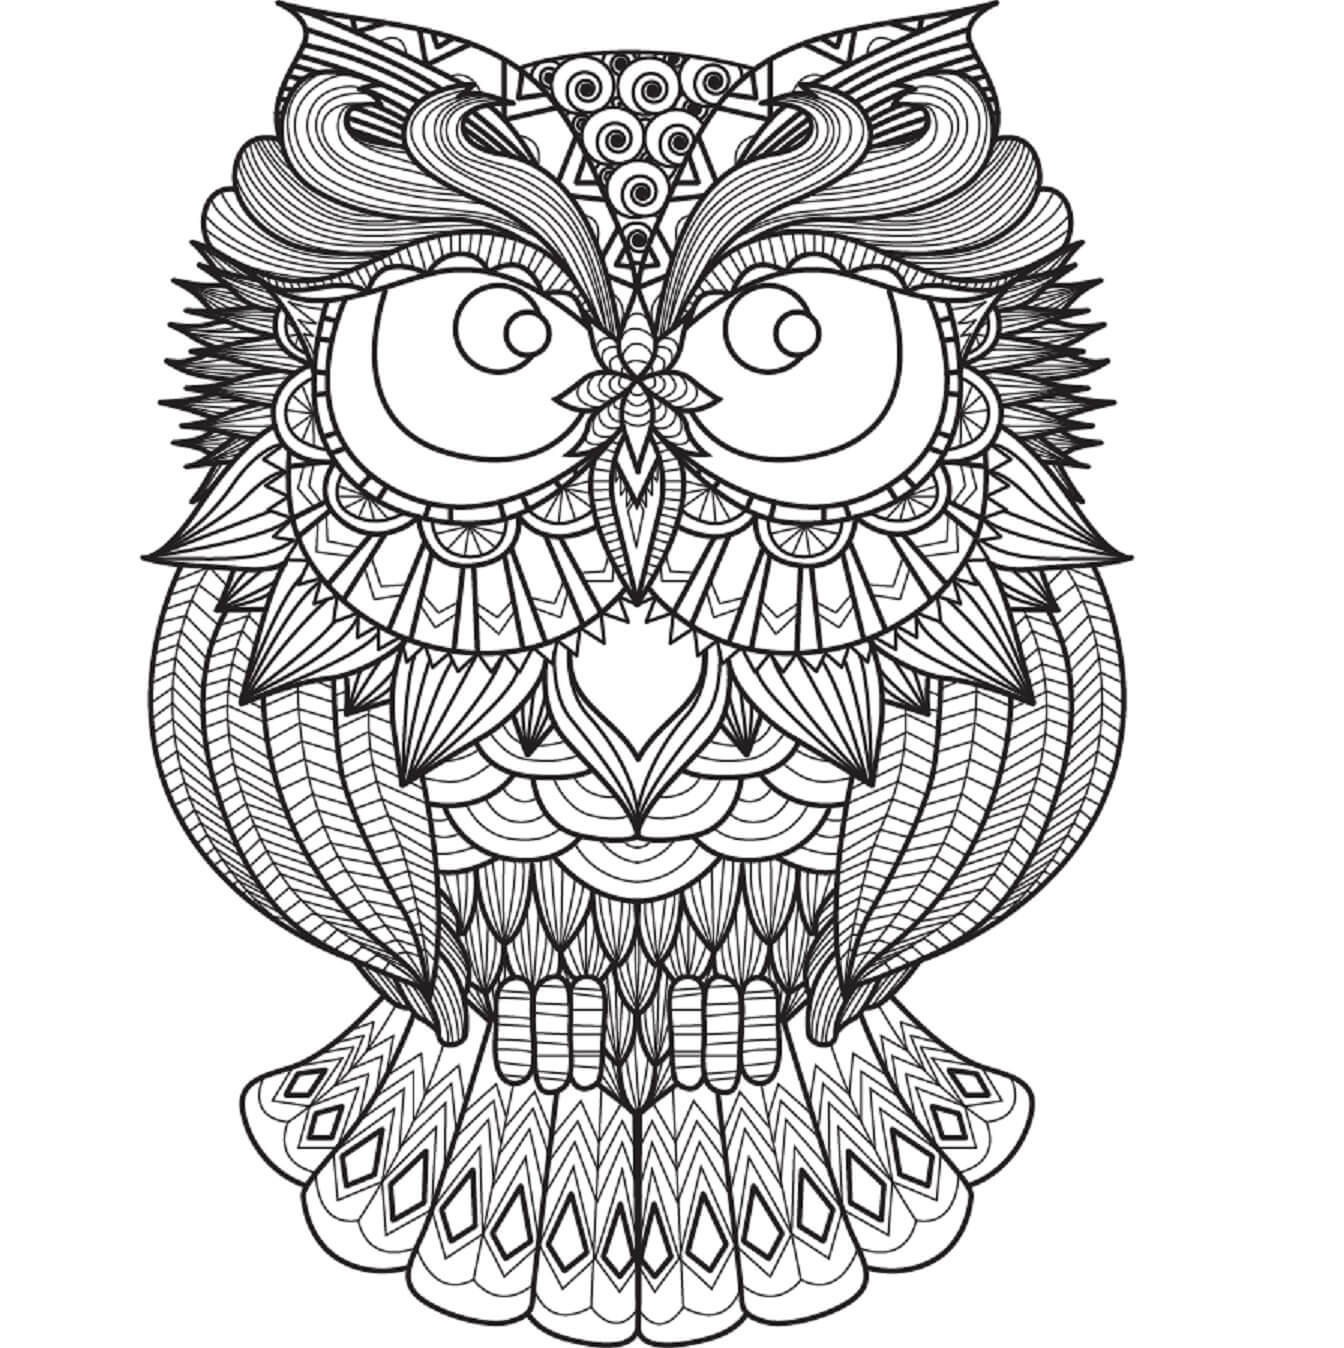 Mandala Owl Coloring Page - Sheet 6 Mandalas